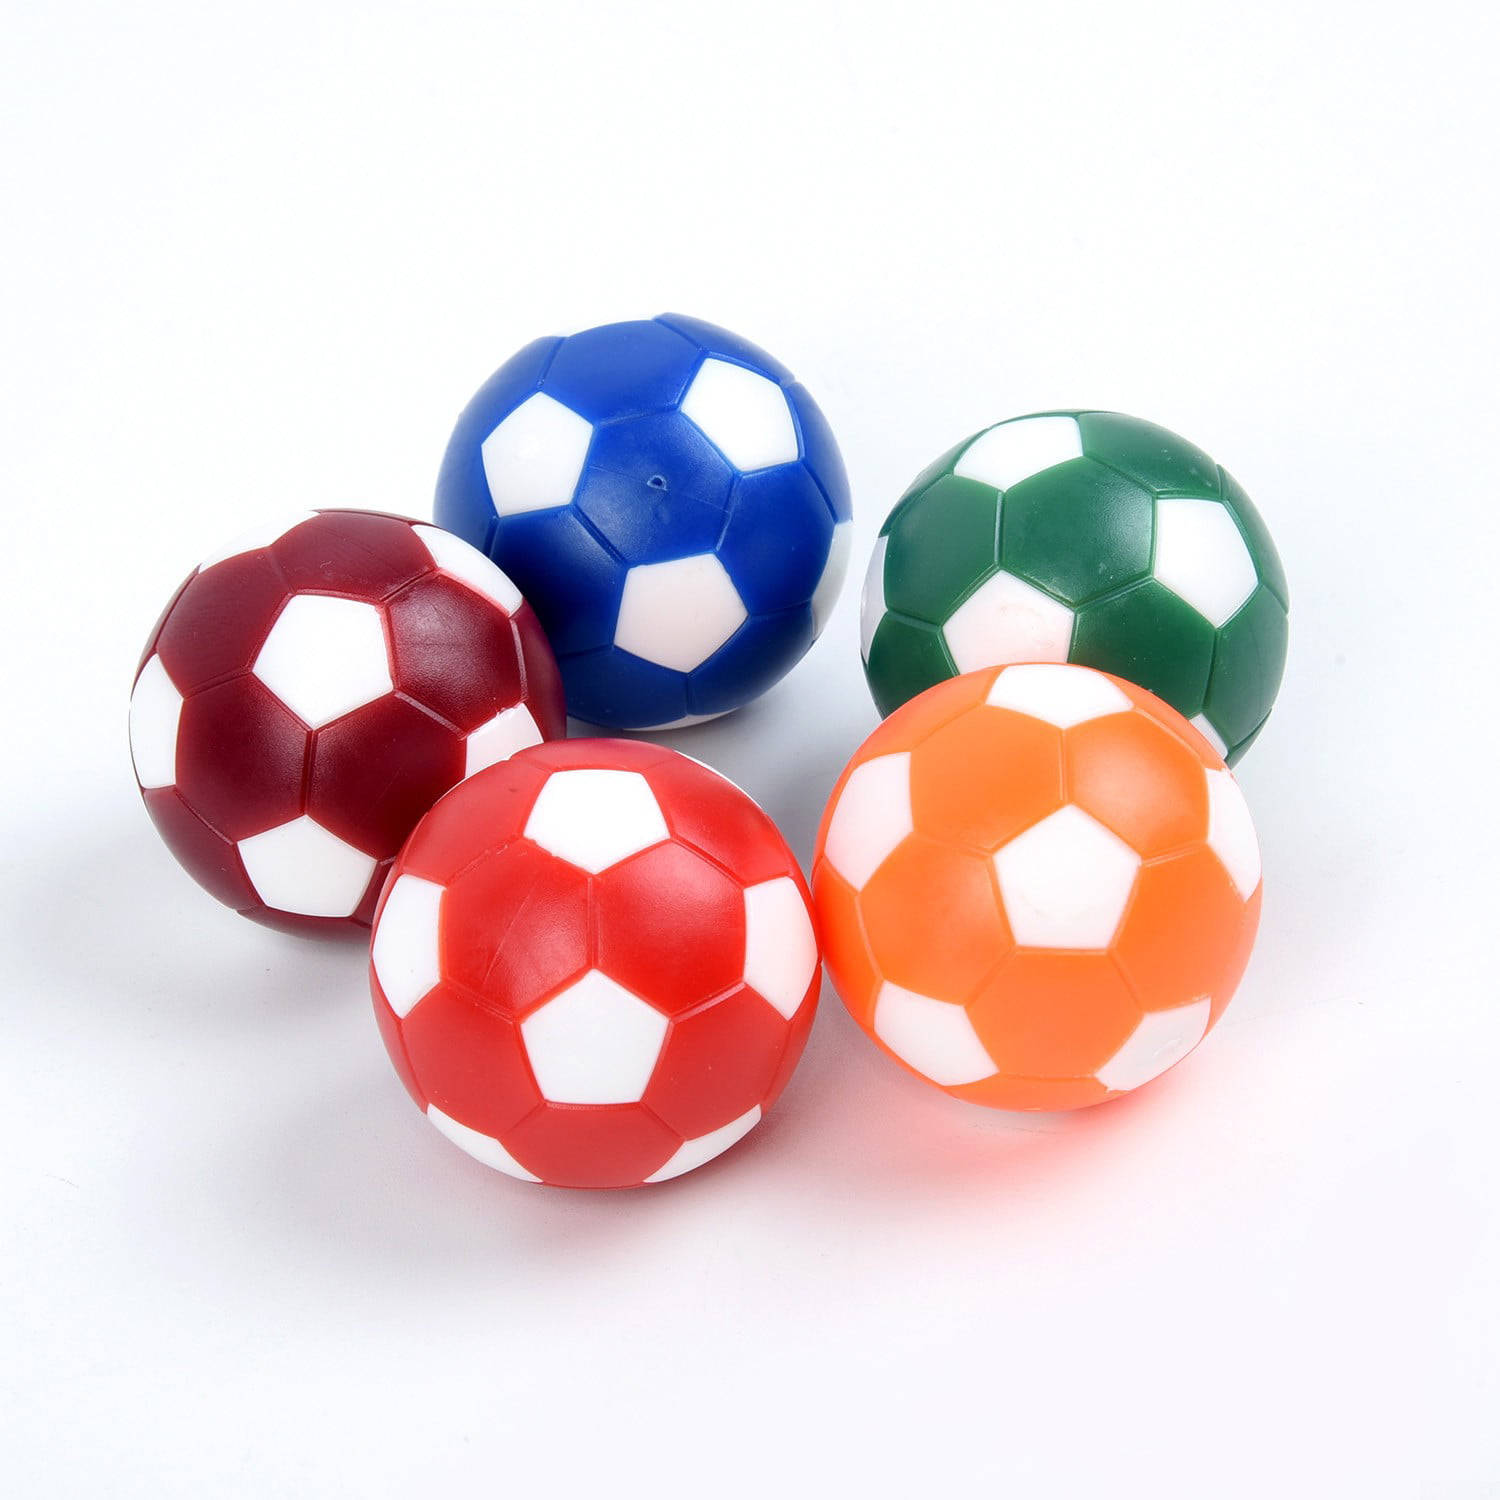 12pcs/Set 32mm Plastic Foosball Mini Table Football Soccer Ball Indoor Game Tool 